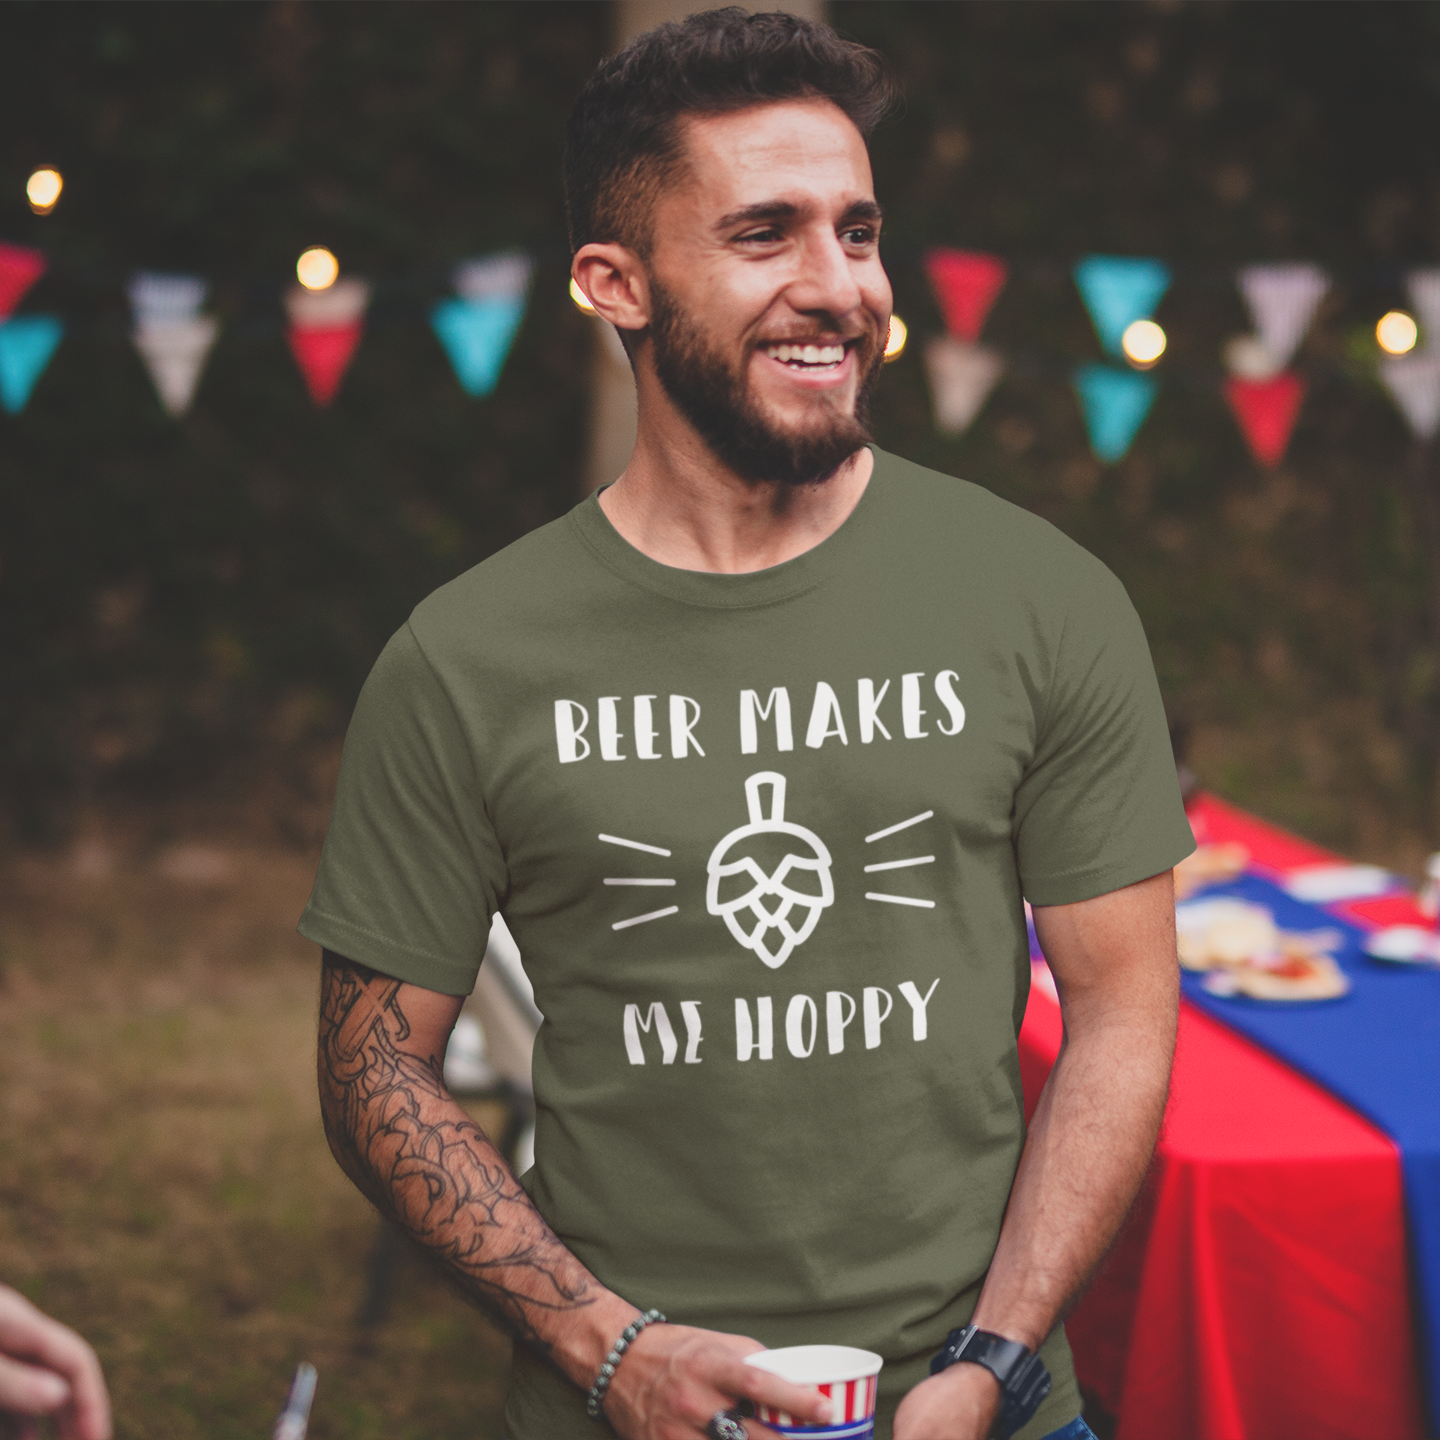 'Beer makes me hoppy' adult shirt